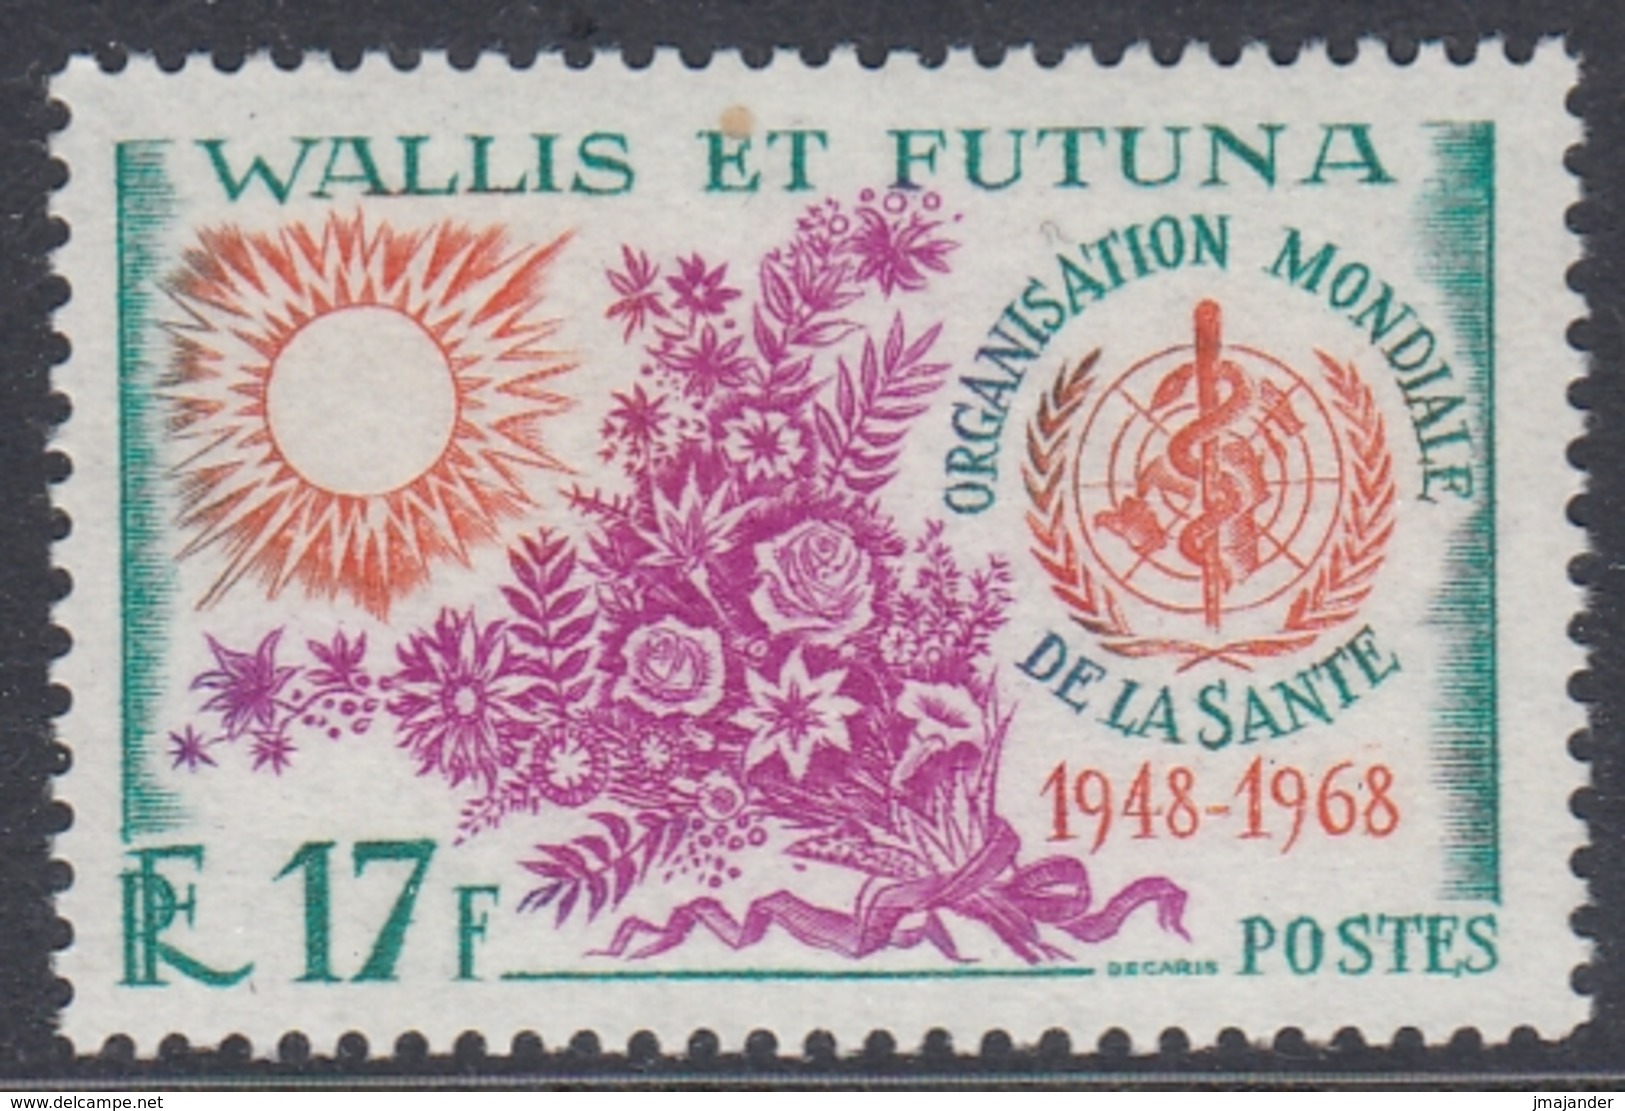 Wallis And Futuna 1968 - The 20th Anniversary Of WHO - Mi 217 ** MNH - Nuovi